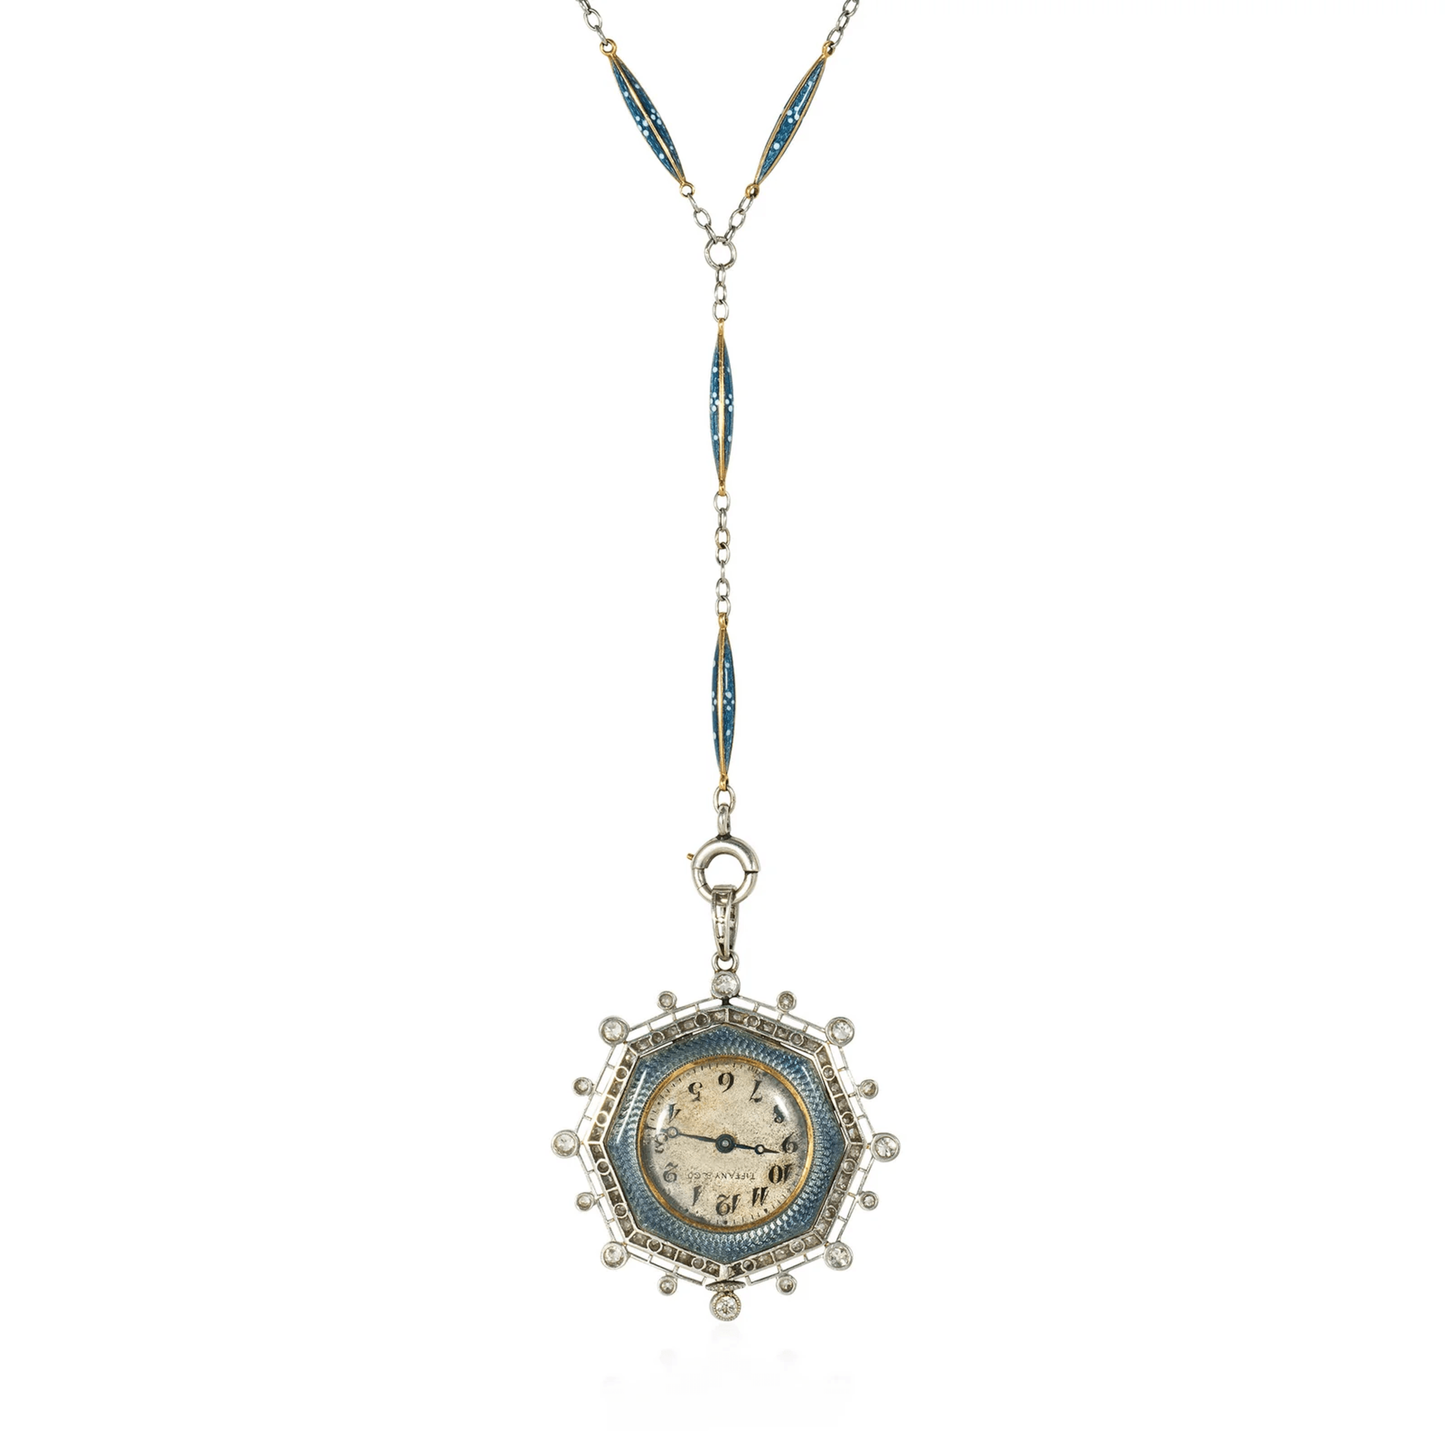 Tiffany & Co. Edwardian Platinum & 14KT Yellow Gold Diamond & Enamel Watch Pendant Necklace watch face